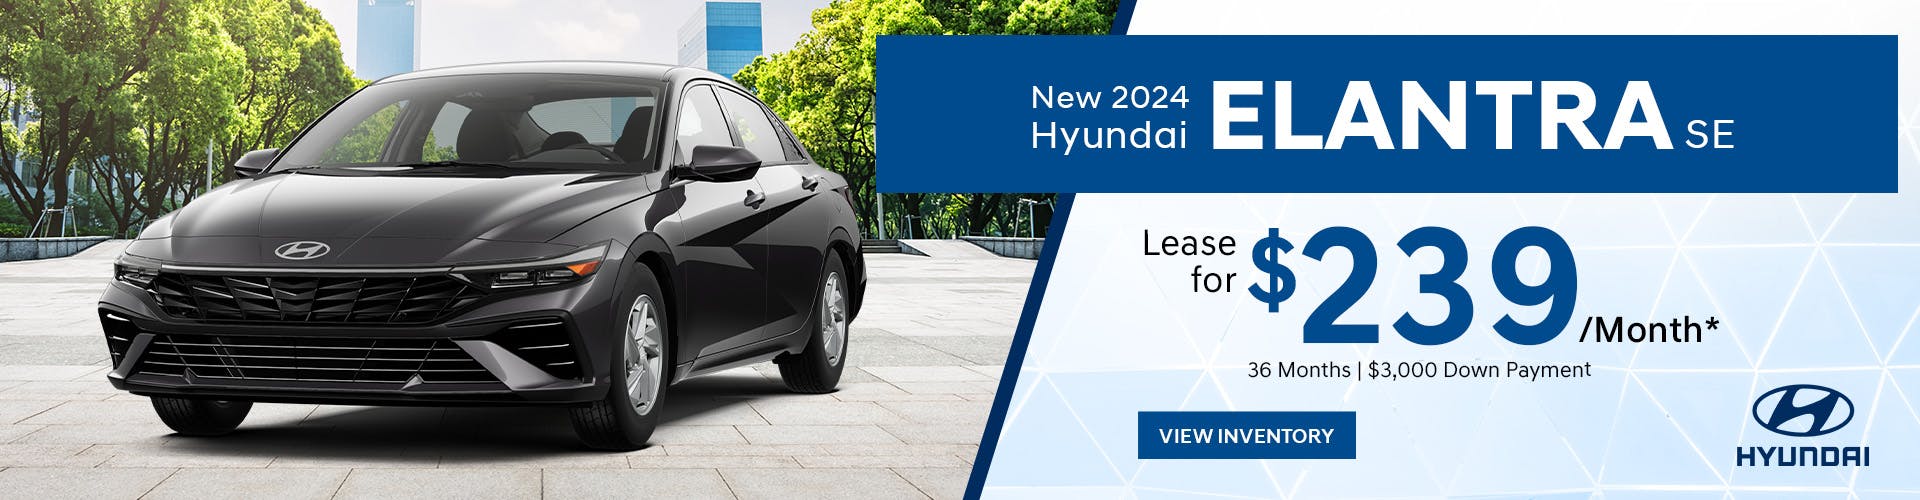 New 2024 Hyundai Elantra SE